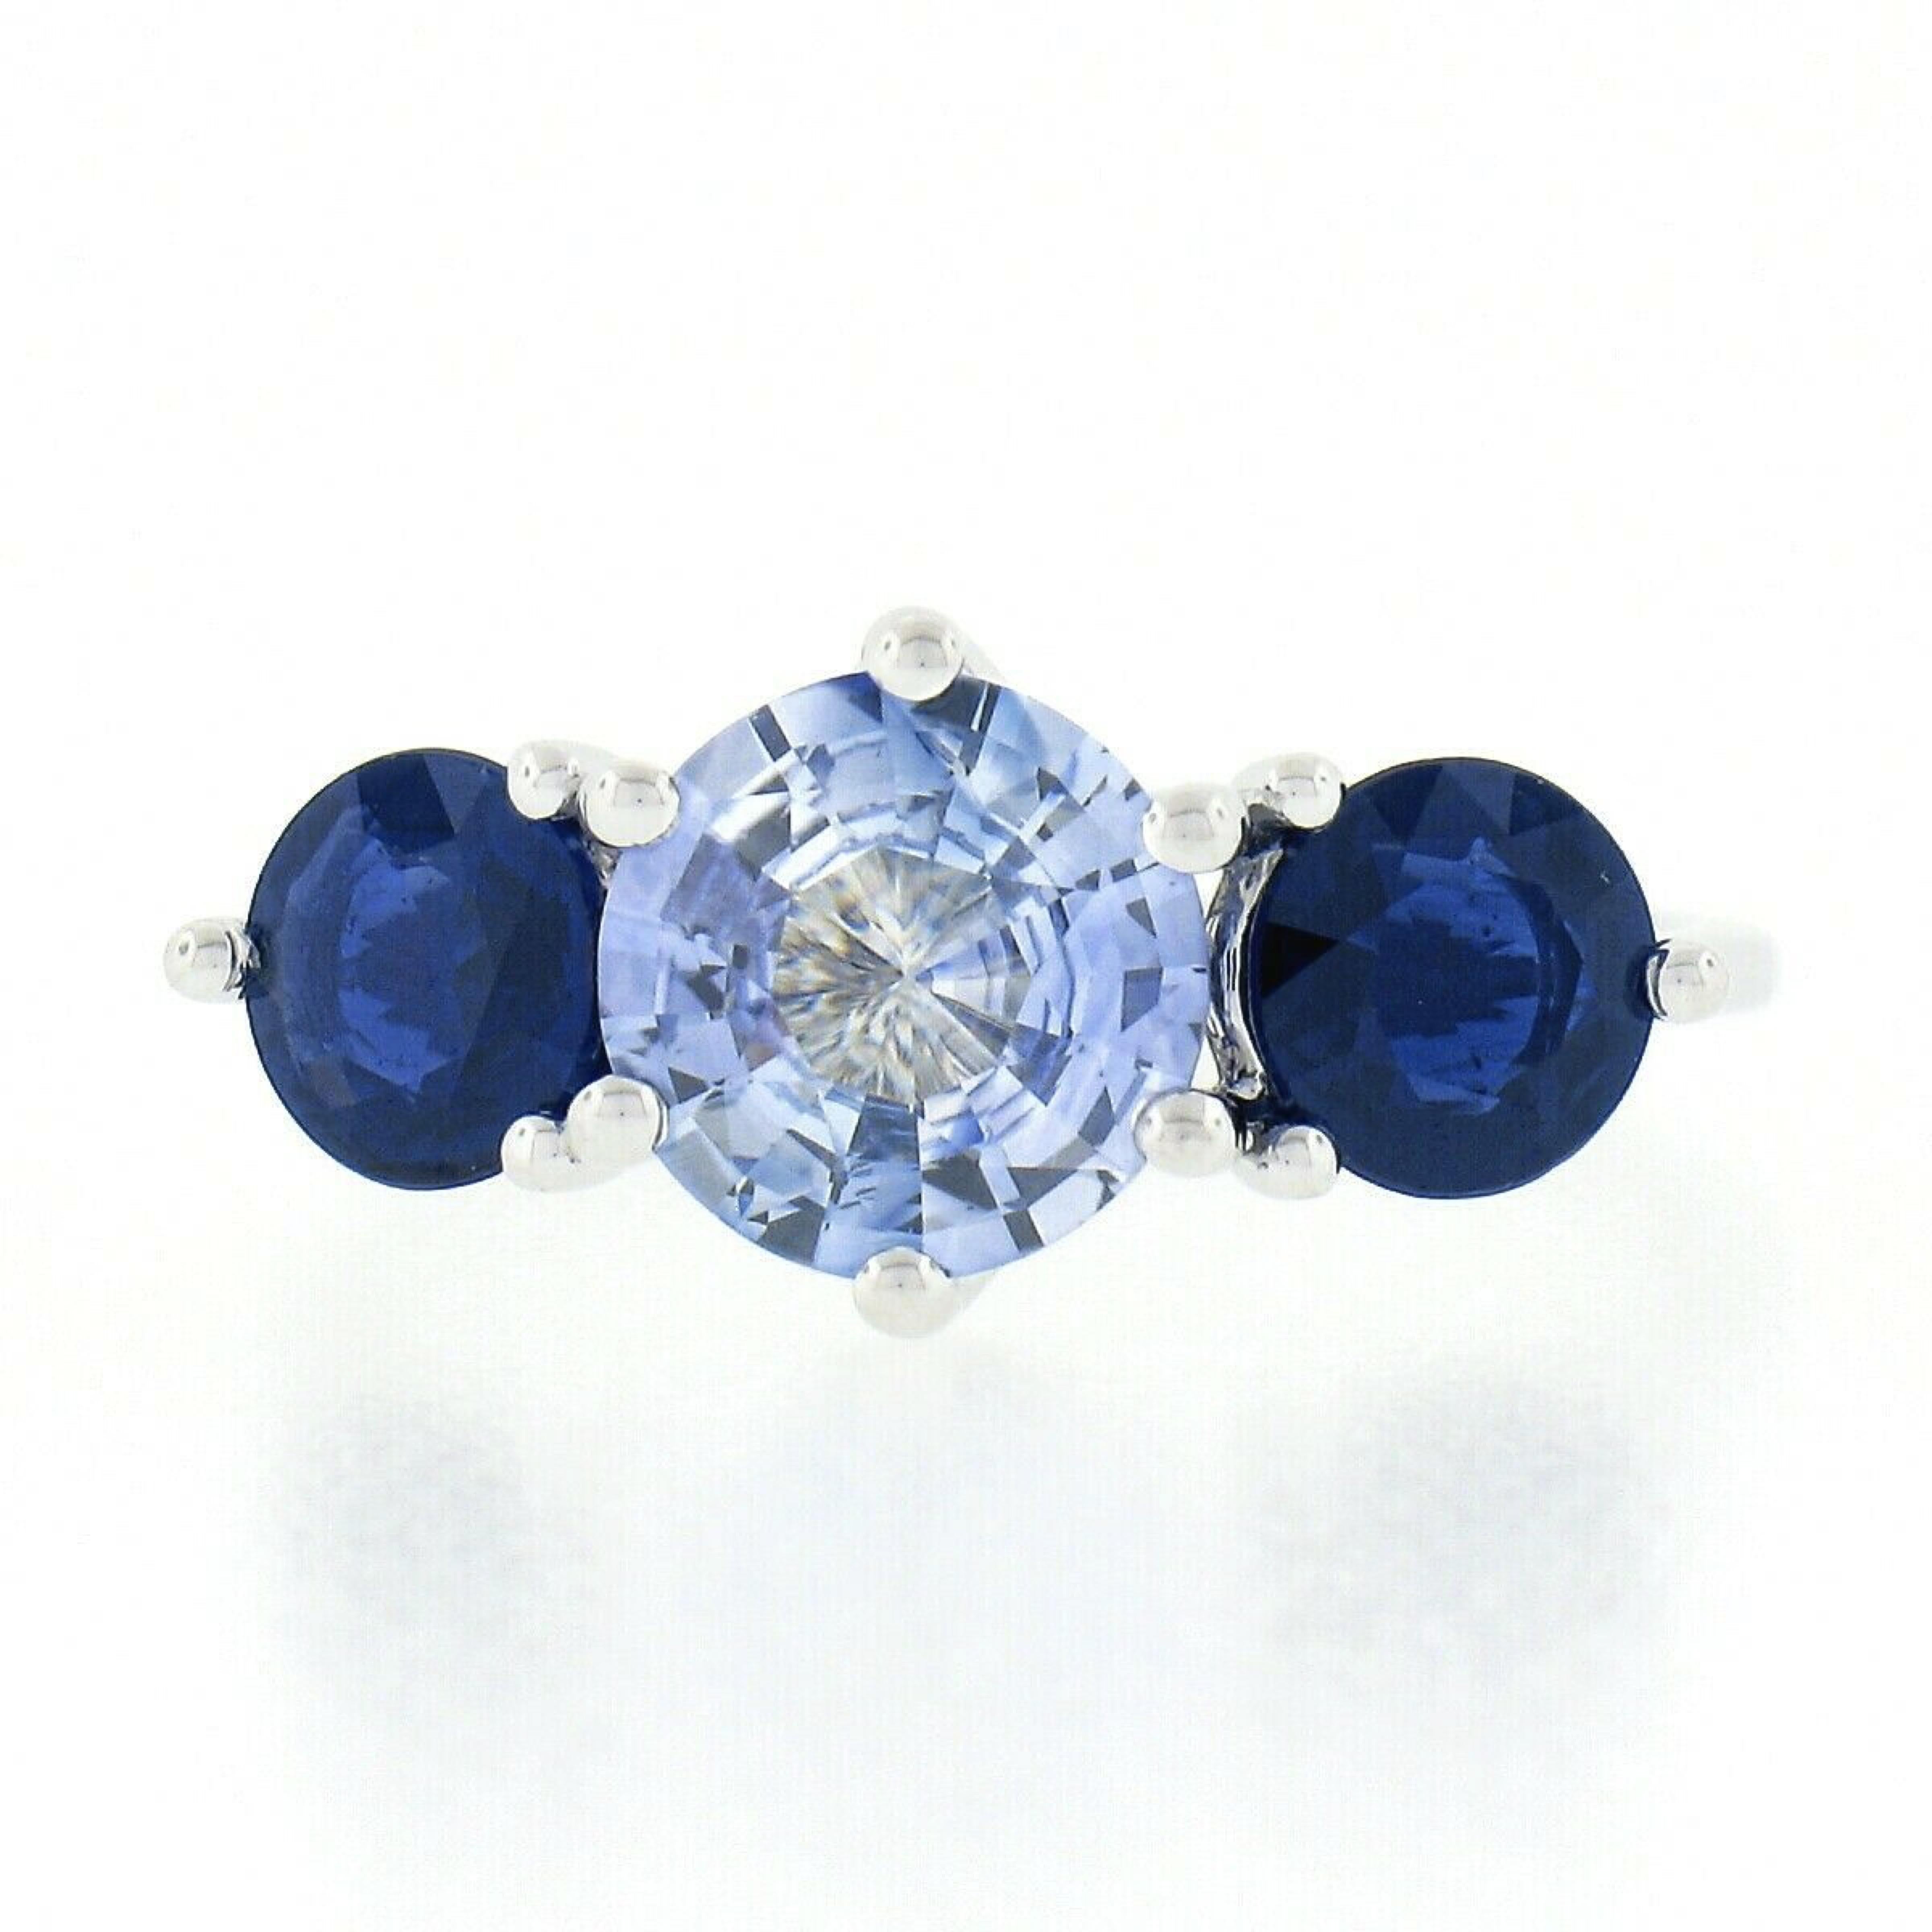 light blue sapphire vs dark blue sapphire